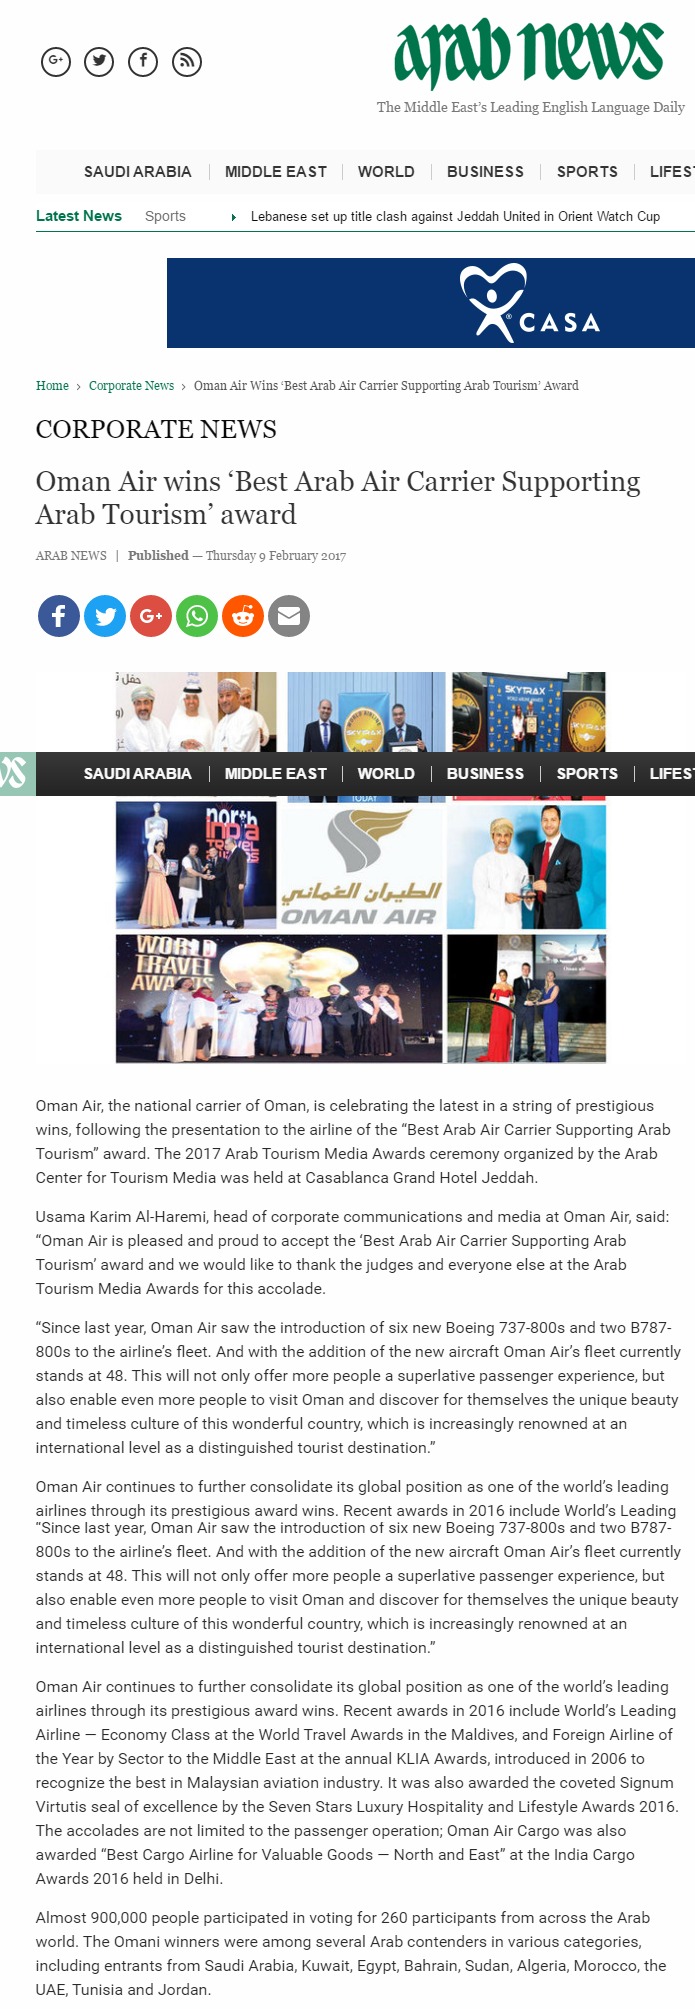 Oman Air wins ‘Best Arab Air Carrier Supporting Arab Tourism’ award